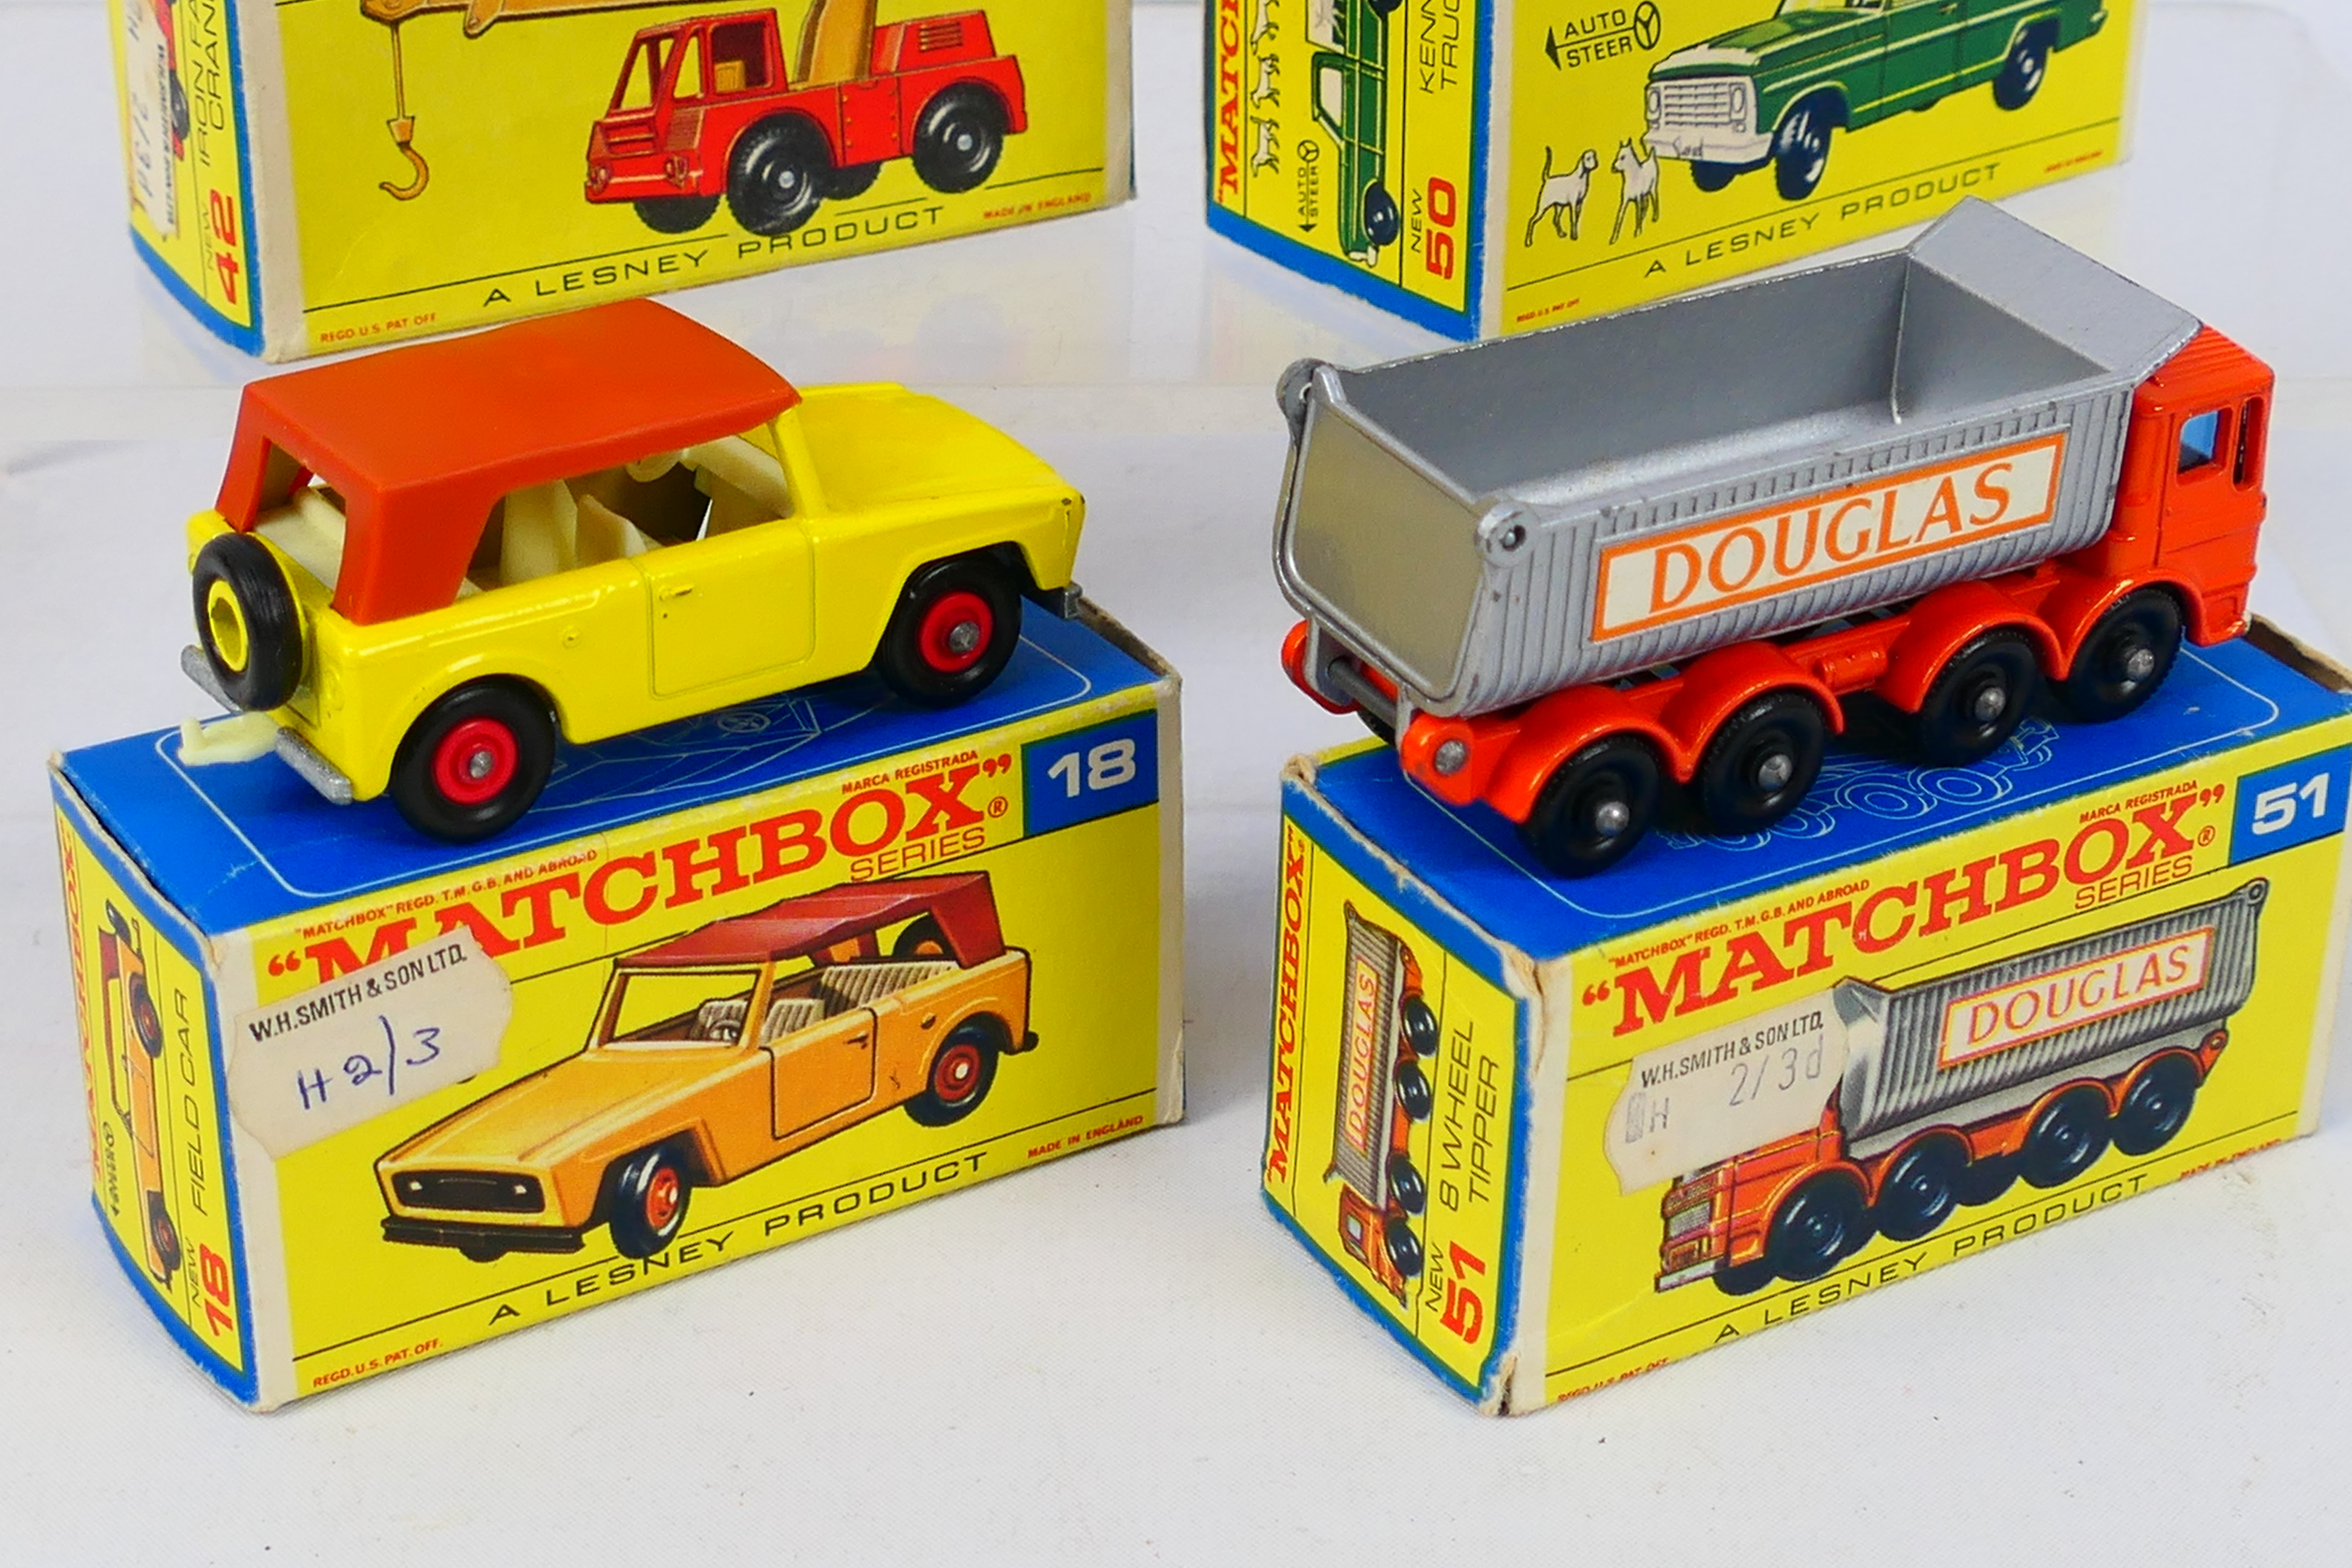 Matchbox - Regular Wheels - 4 x boxed models, Field Car # 18, - Image 5 of 6